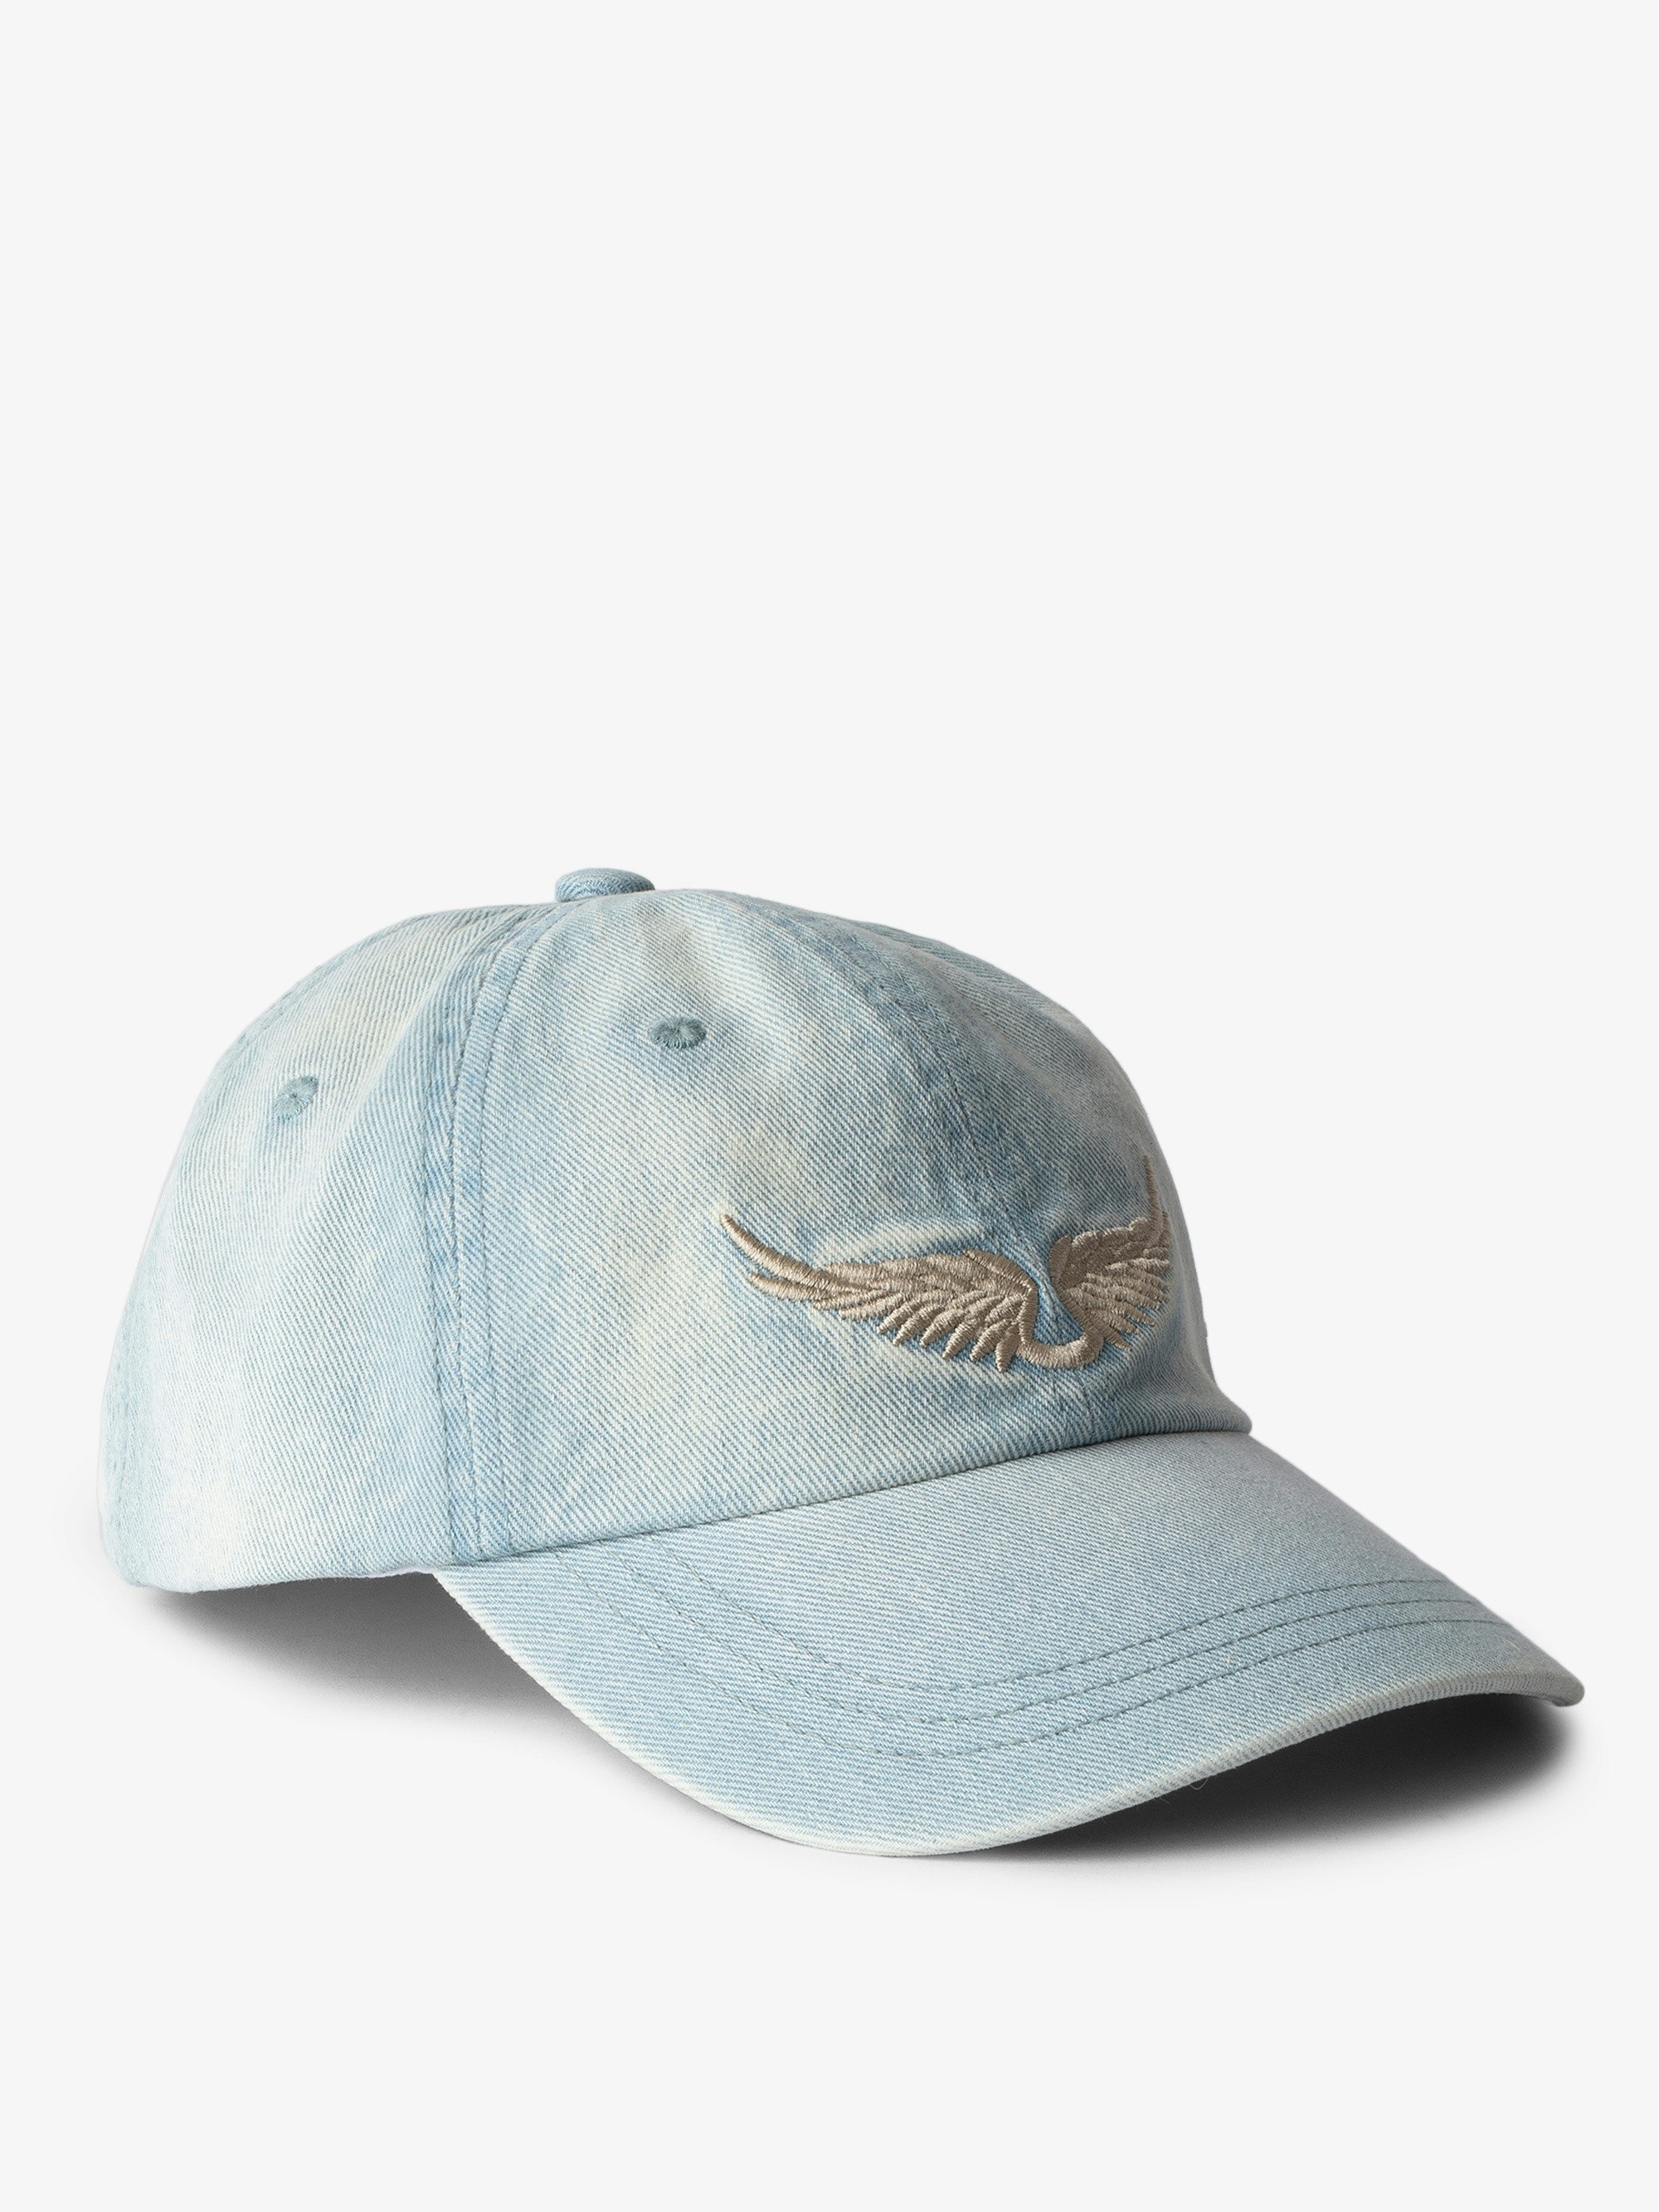 Klelia Rock Baseball Cap - Sky blue denim baseball cap with wings embroidery.